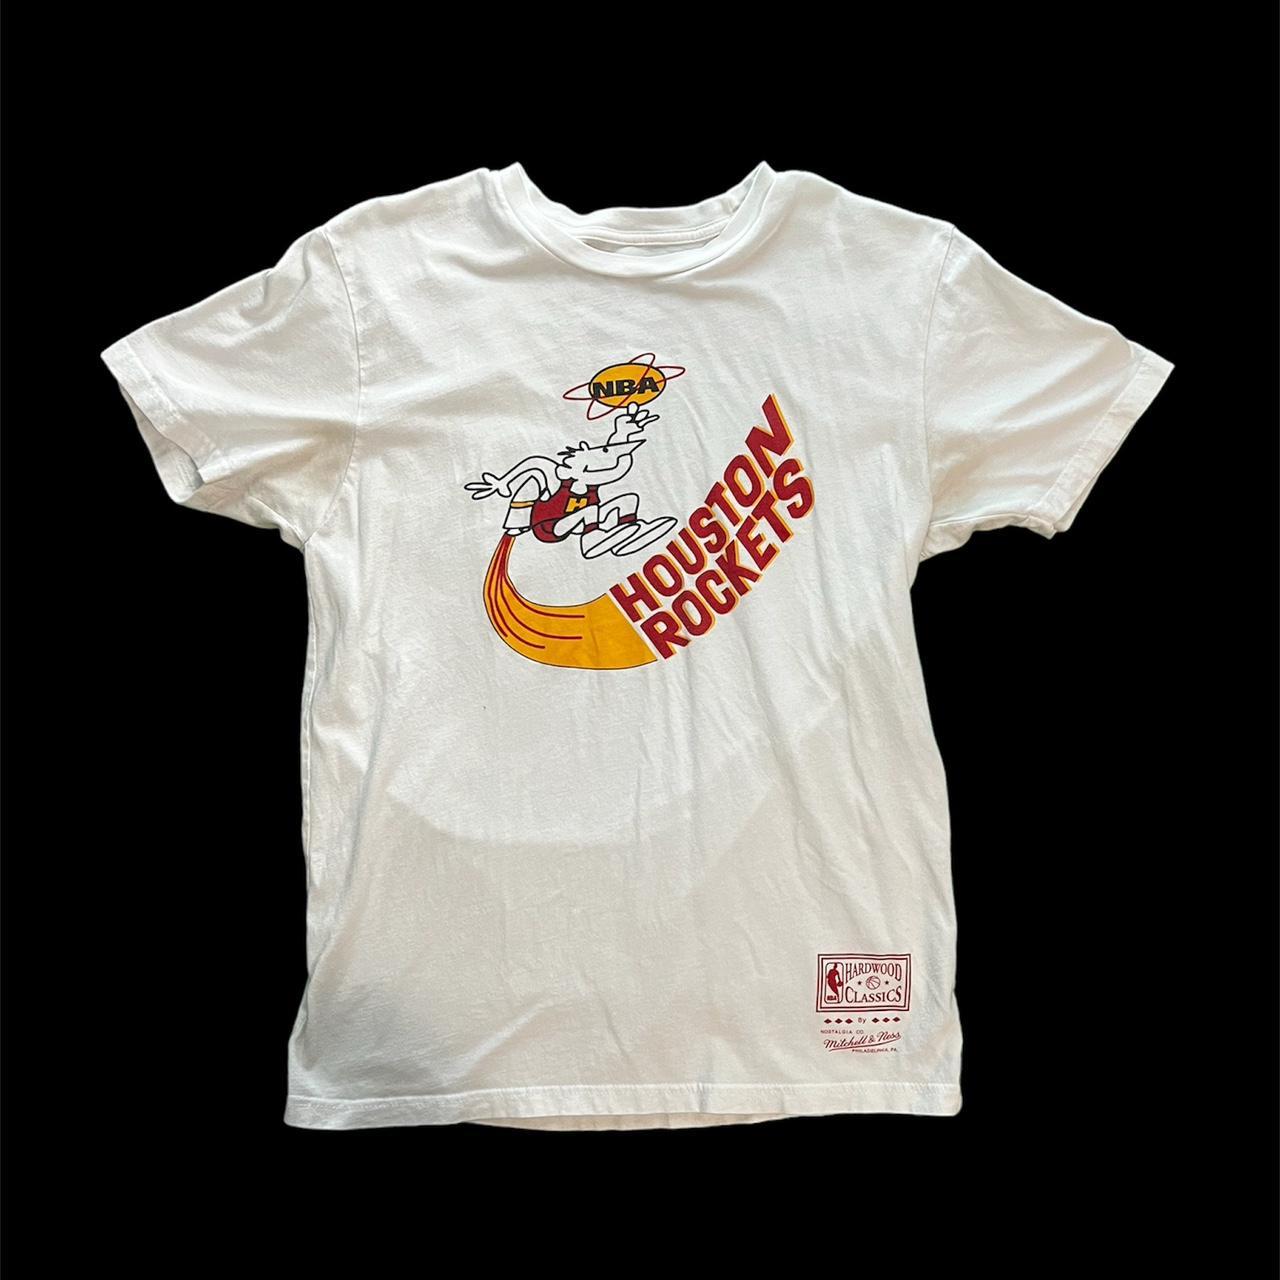 Mitchell & Ness Men's Houston Rockets Logo T-shirt